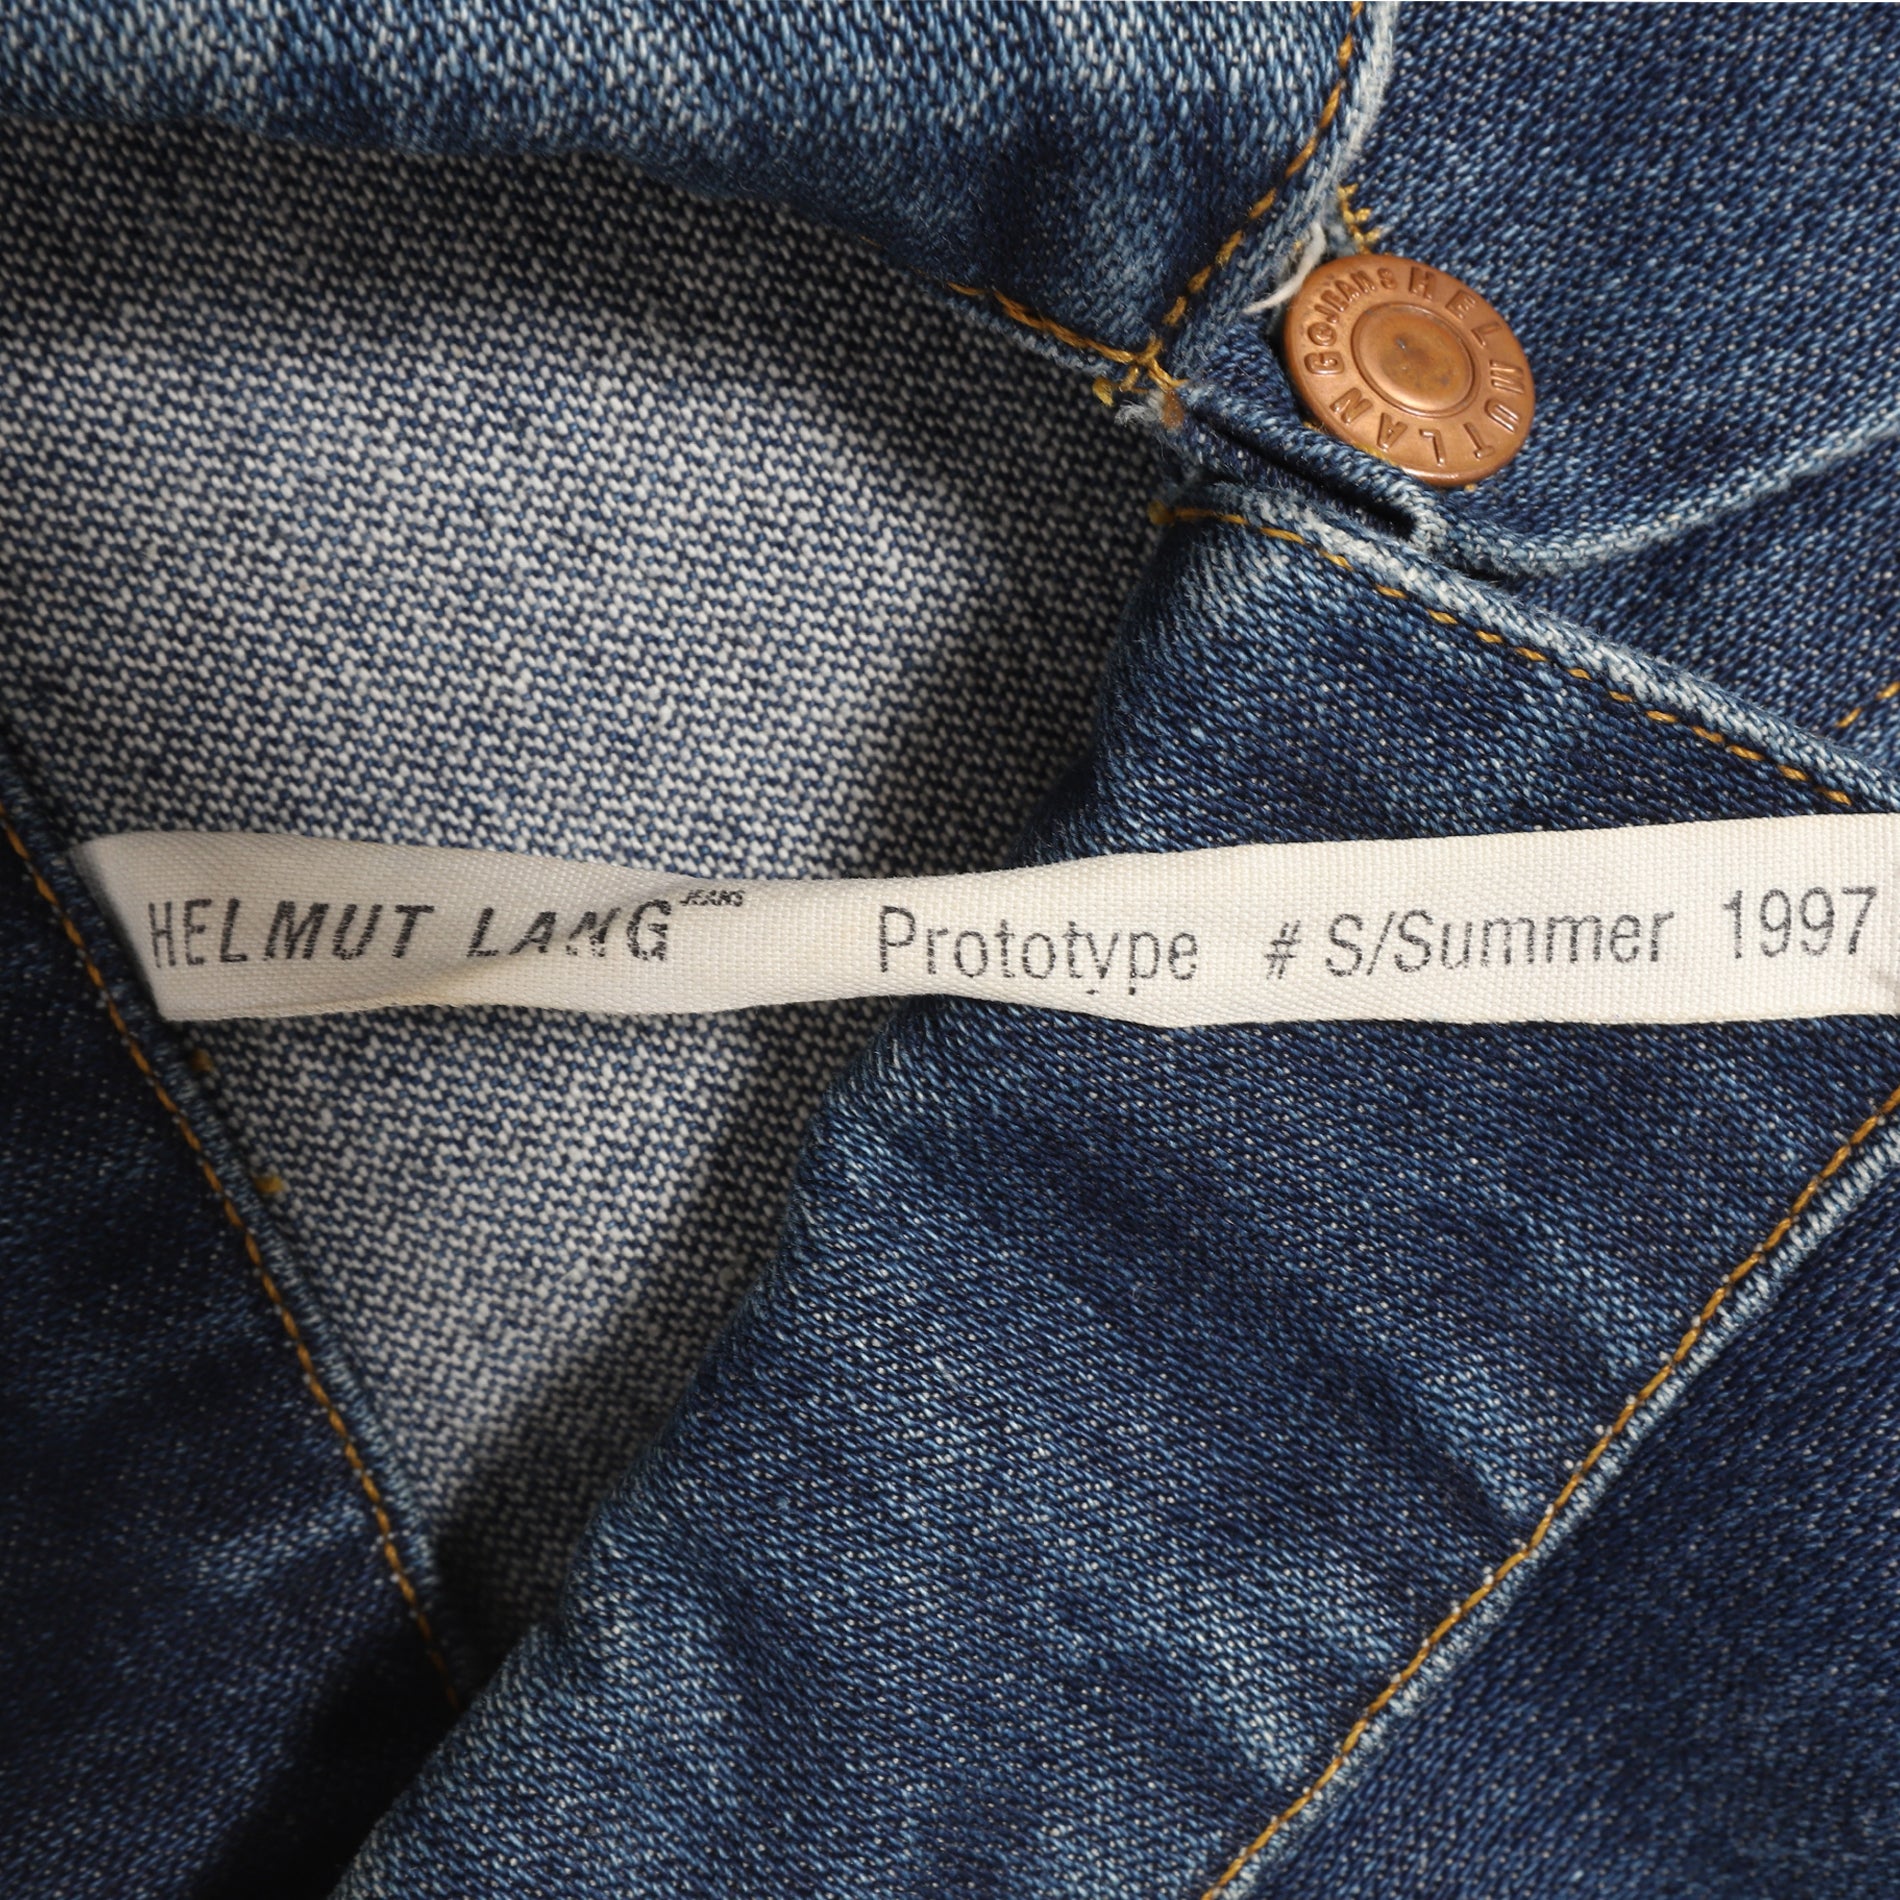 Helmut Lang SS97 Prototype Resin Stripe Denim Jacket